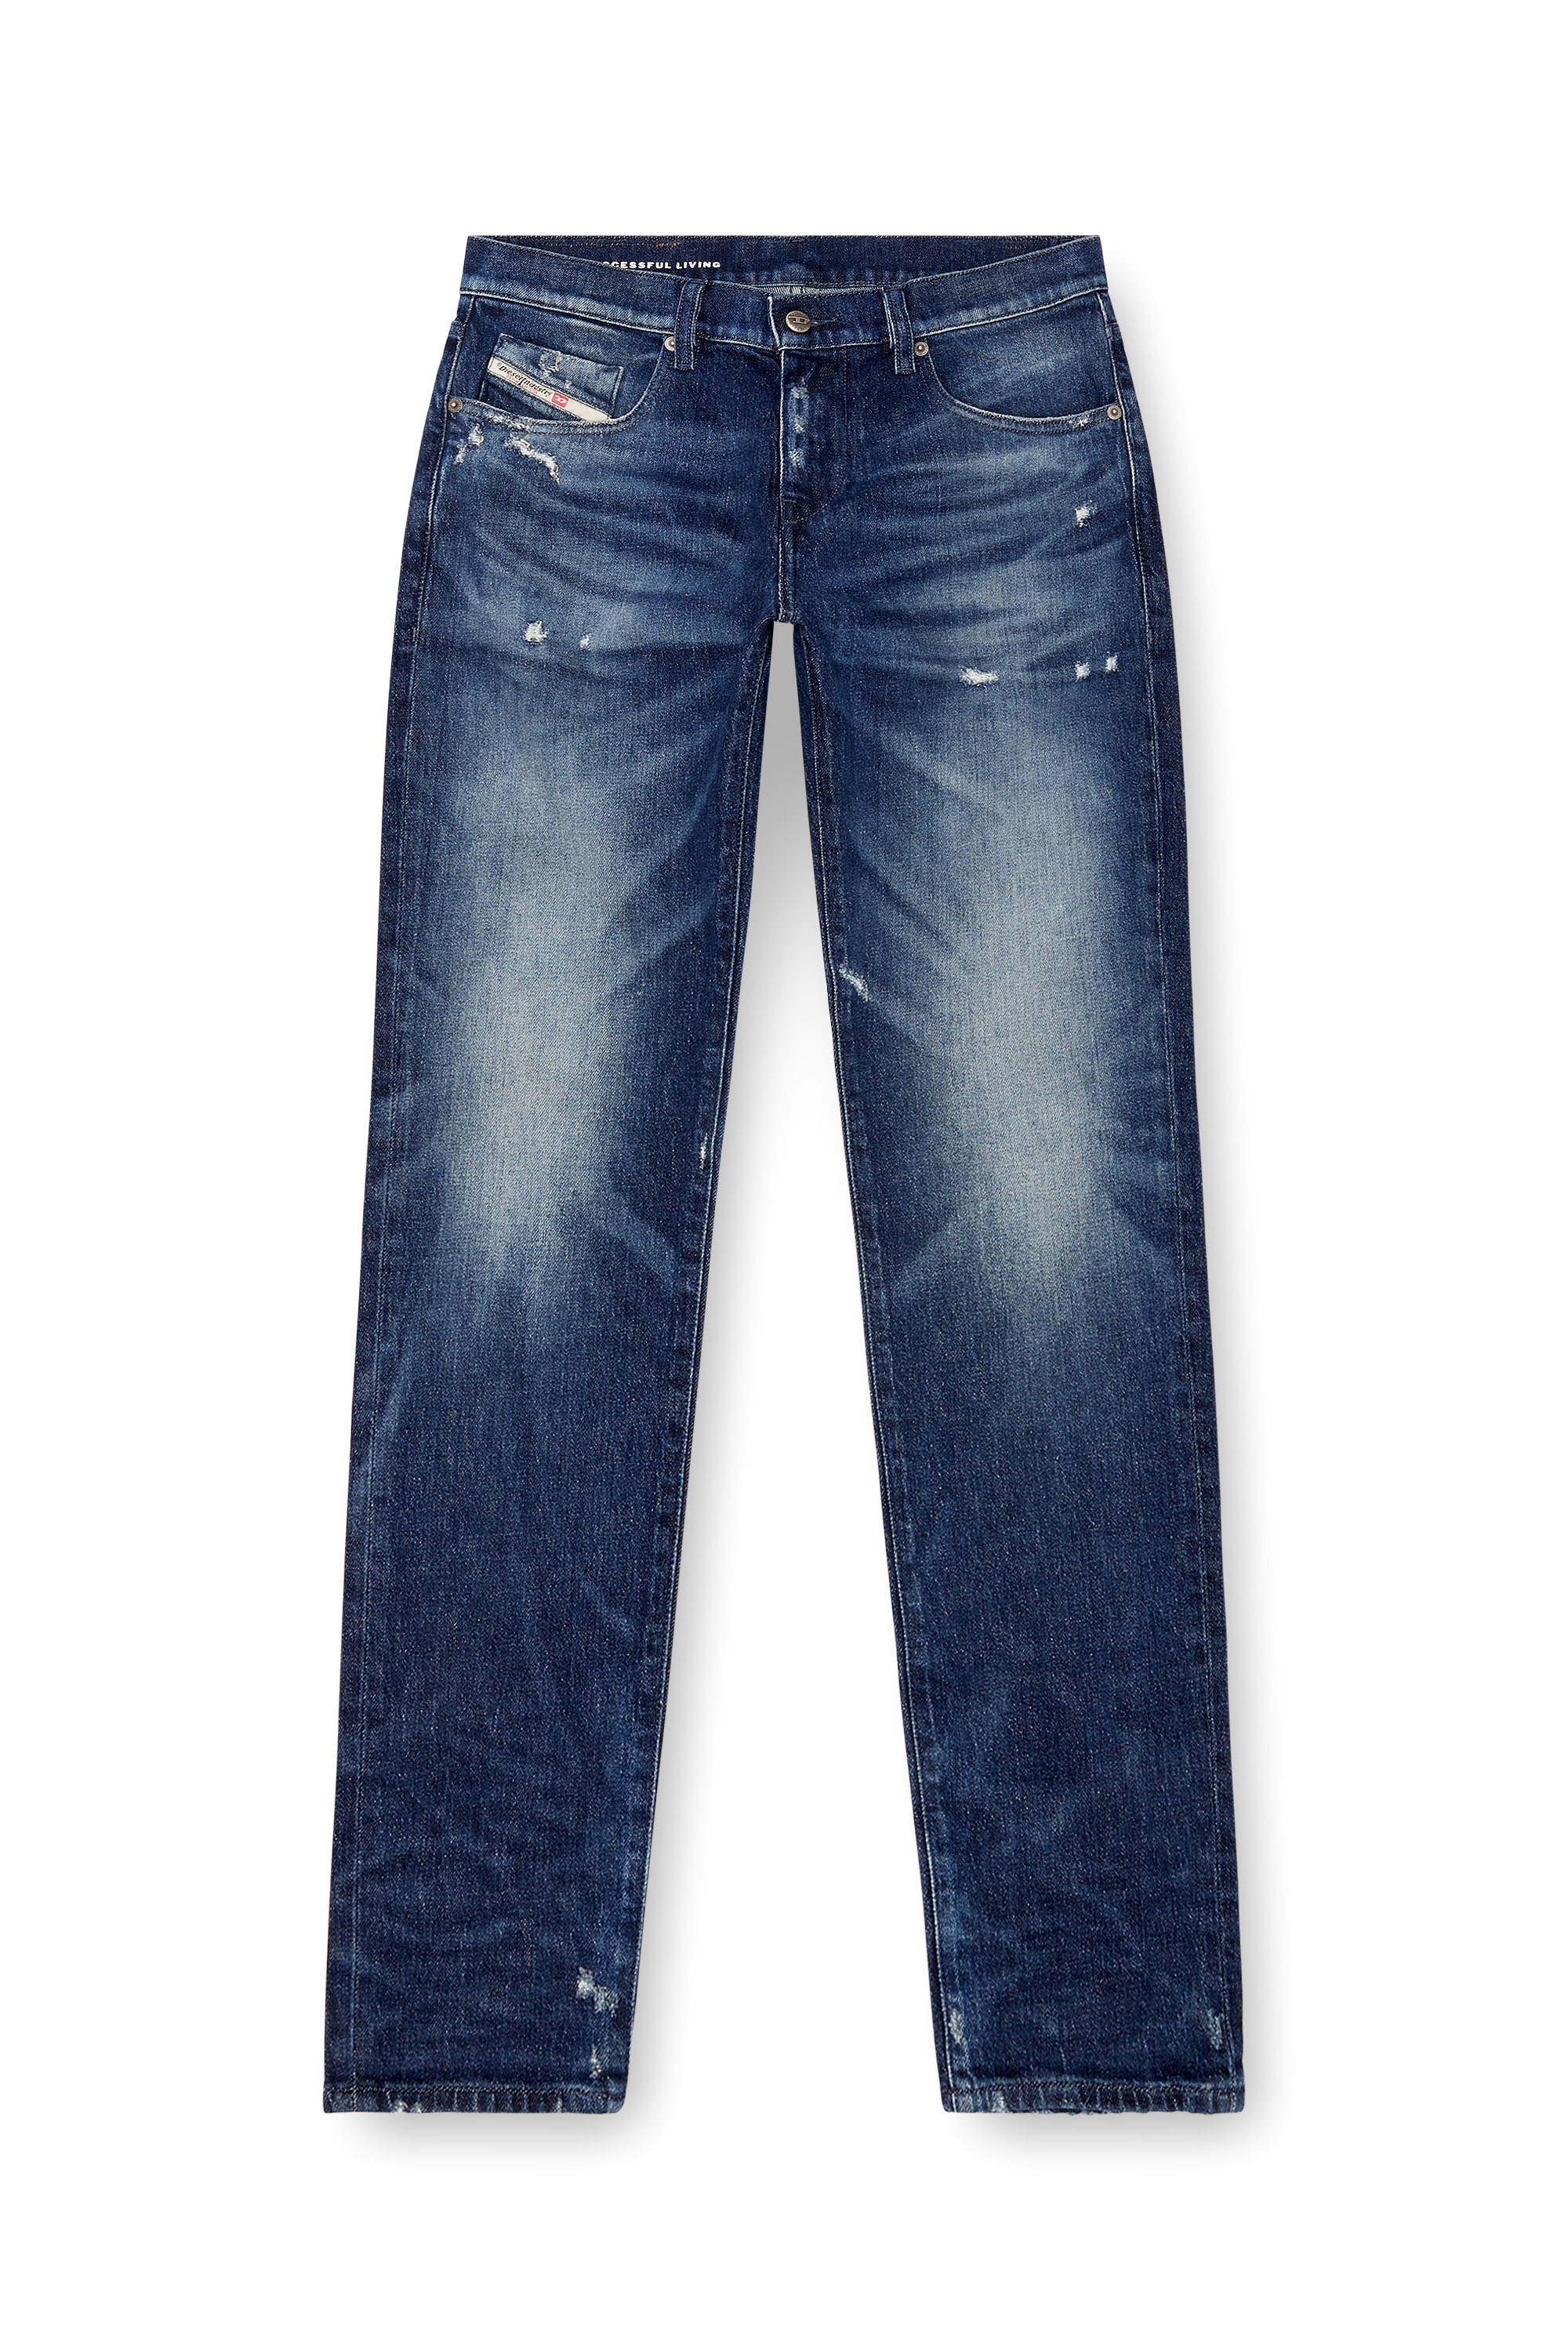 Diesel - Slim Jeans 2019 D-Strukt 09J56, Hombre Slim Jeans - 2019 D-Strukt in Azul marino - Image 5